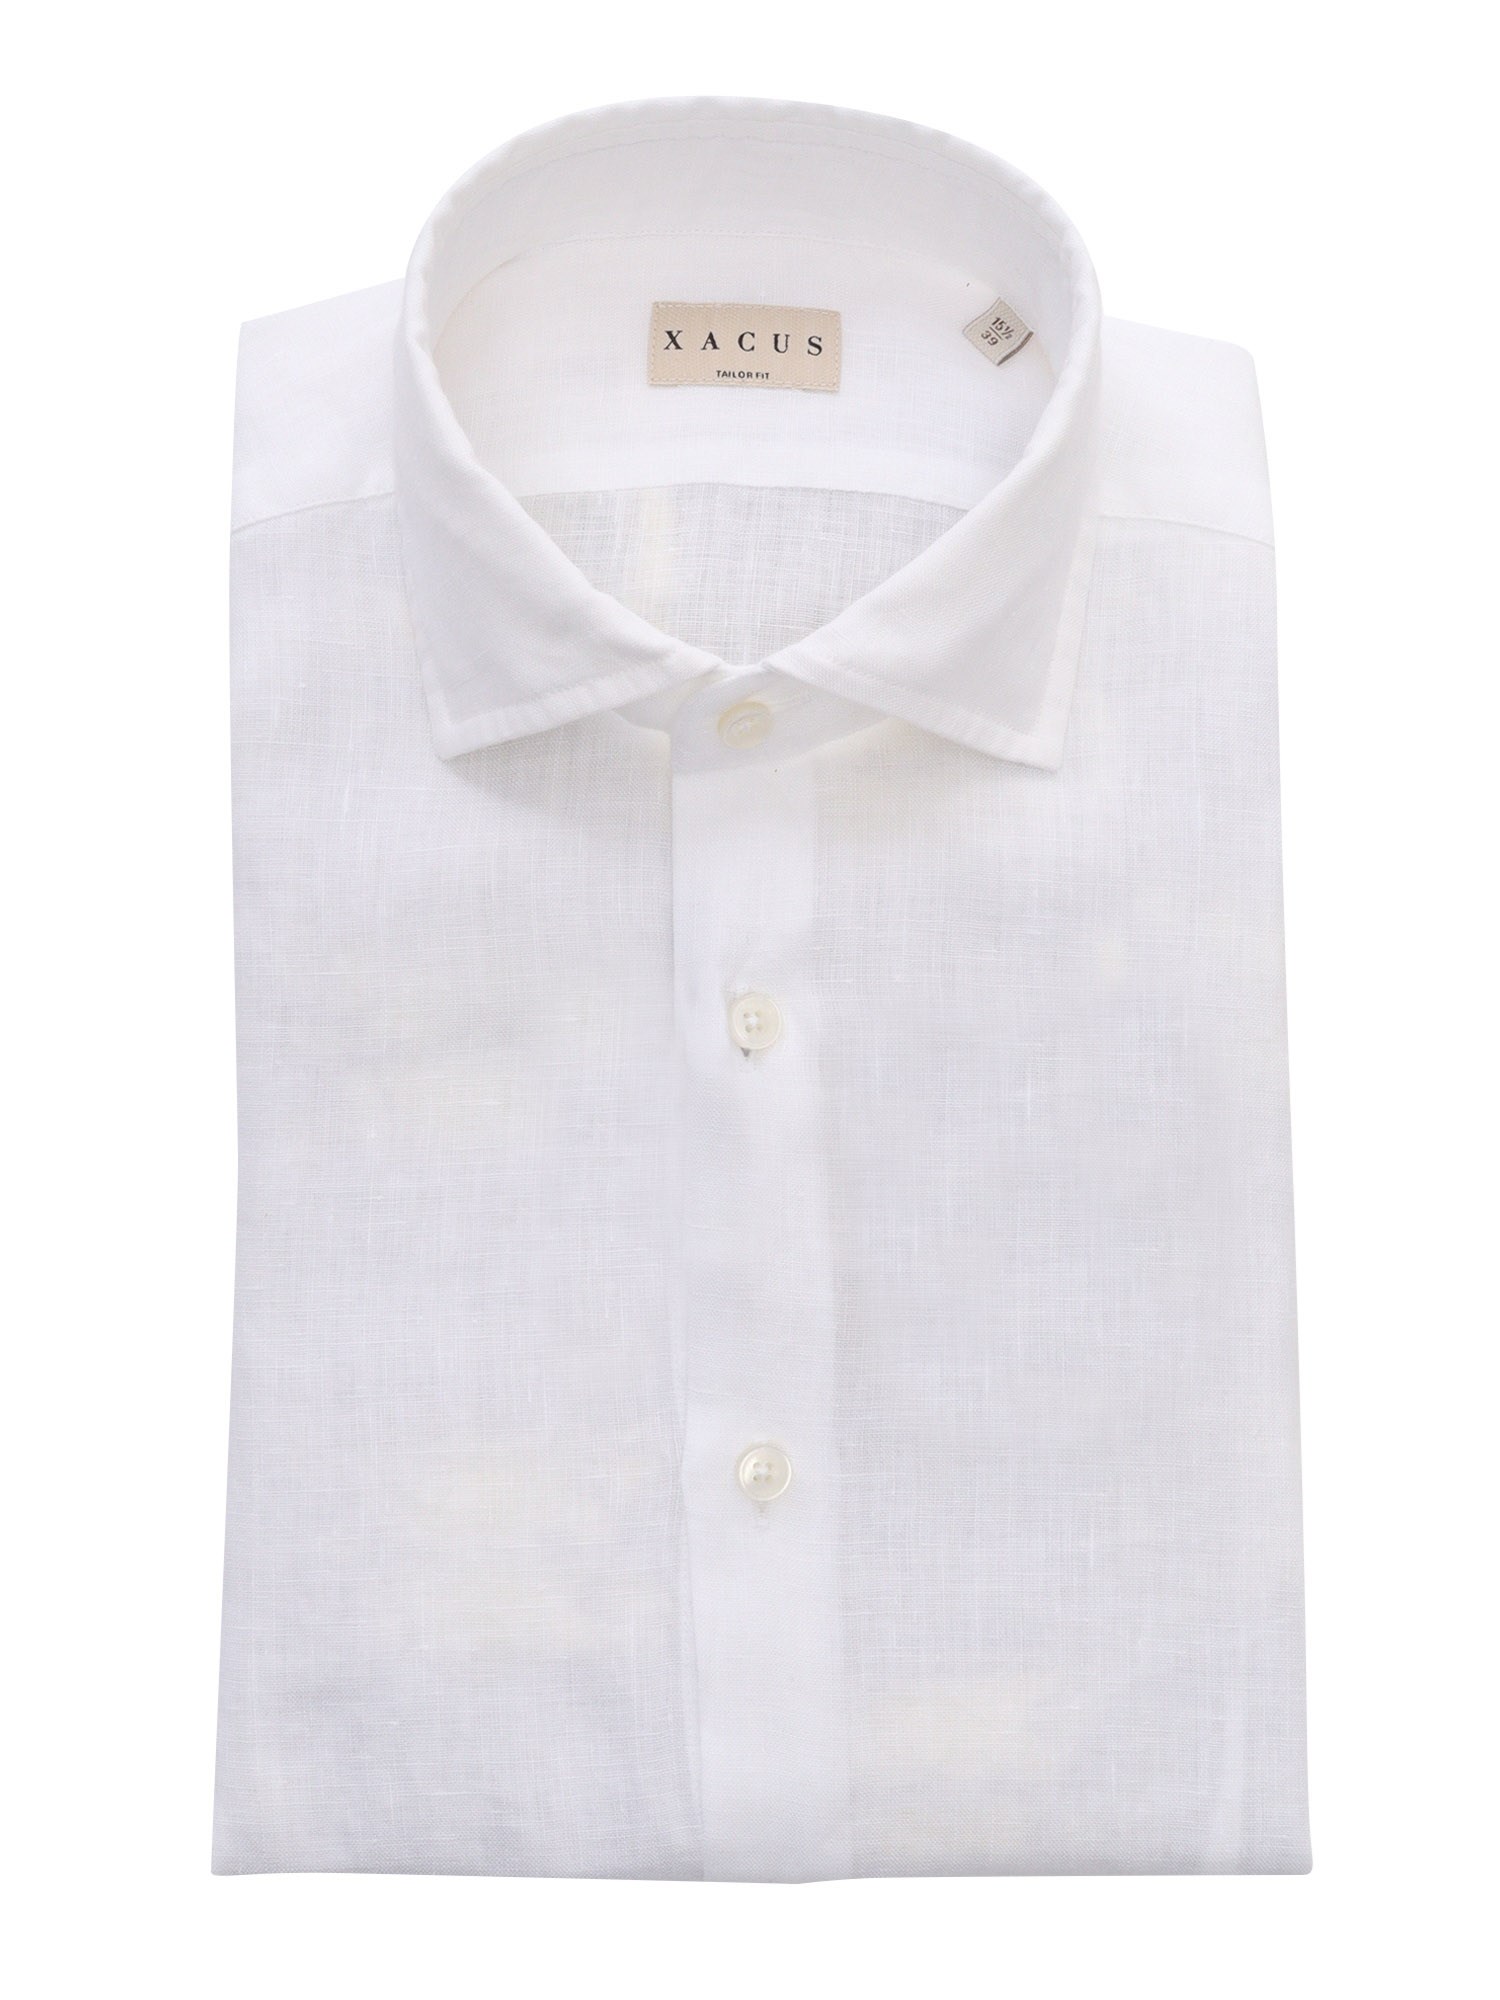 Xacus White Linen Shirt In Blue